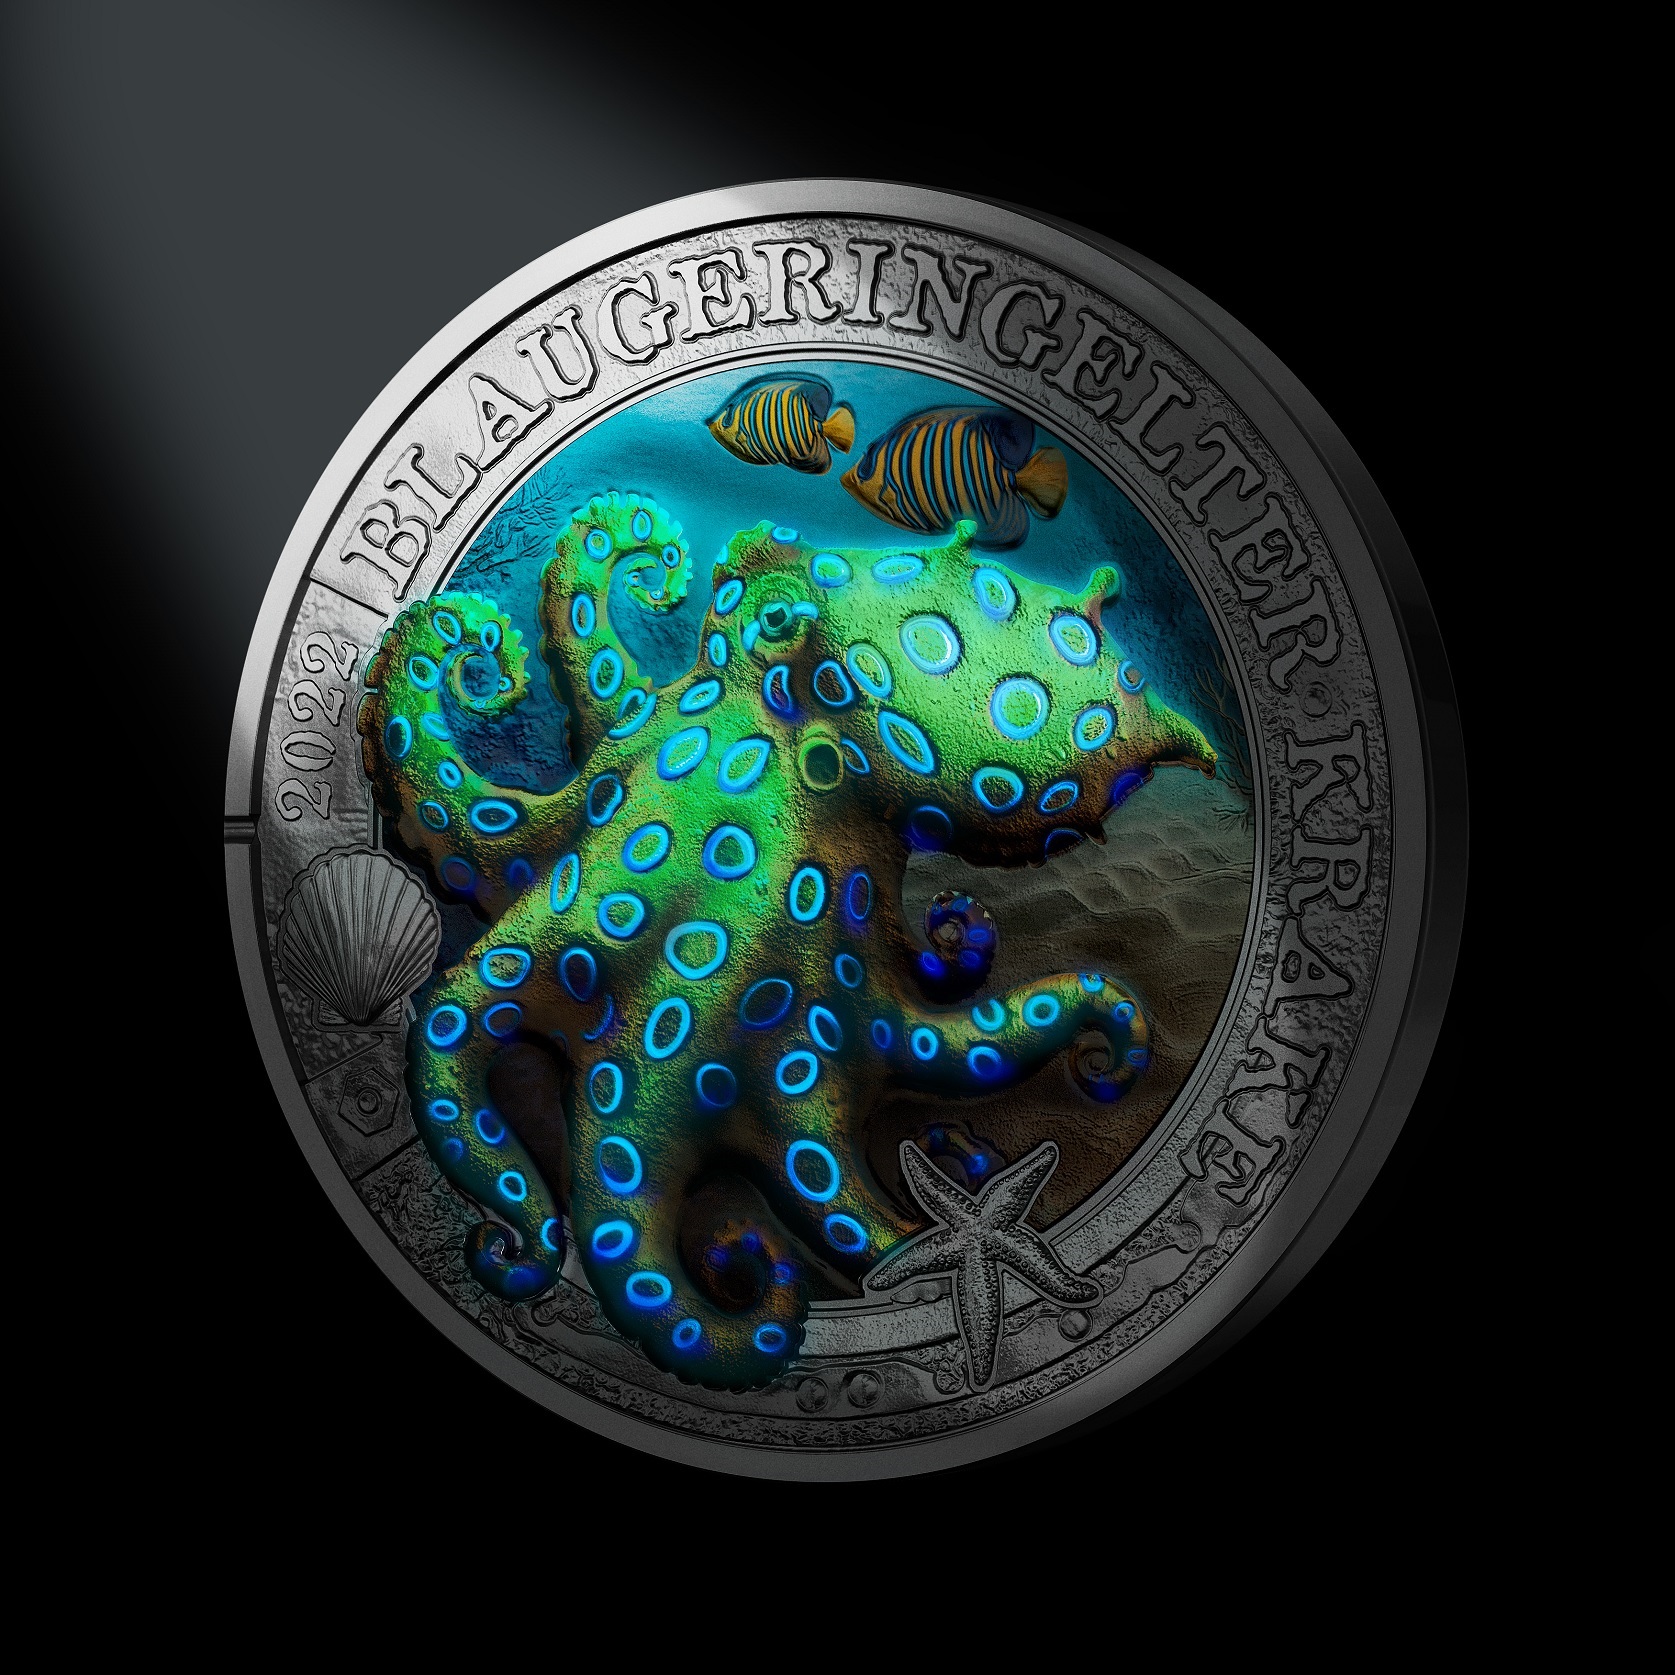 (EUR01.Unc.2022.25631) 3 € Austria 2022 - Blue-ringed octopus Reverse (glow-in-the-dark) (zoom)